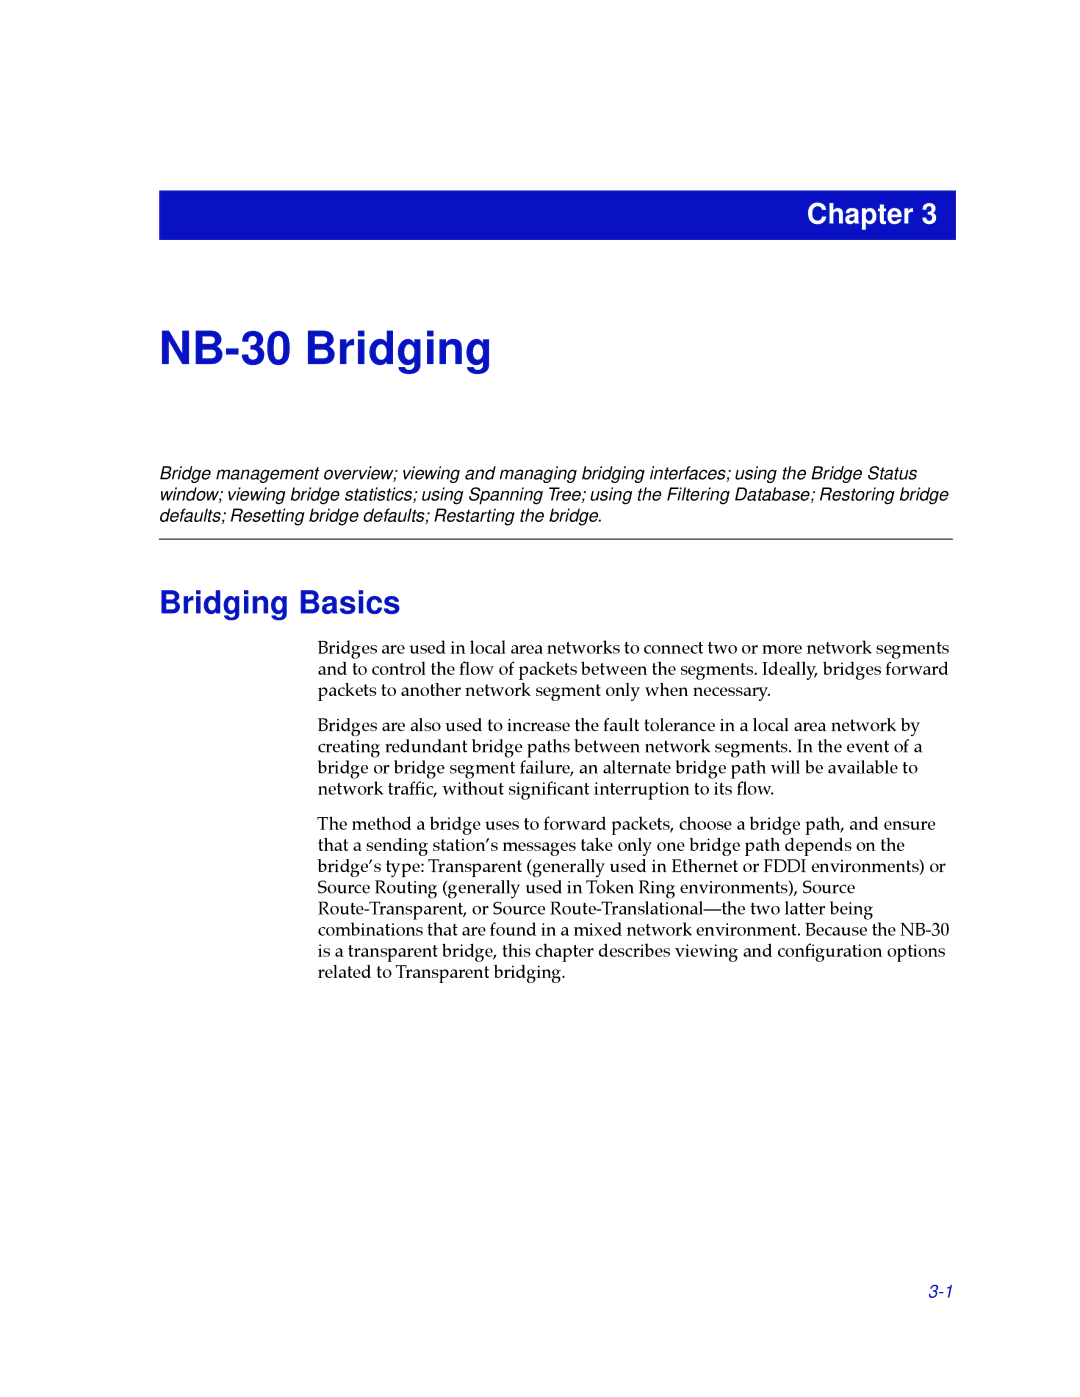 Cabletron Systems NB30 manual NB-30 Bridging, Bridging Basics 